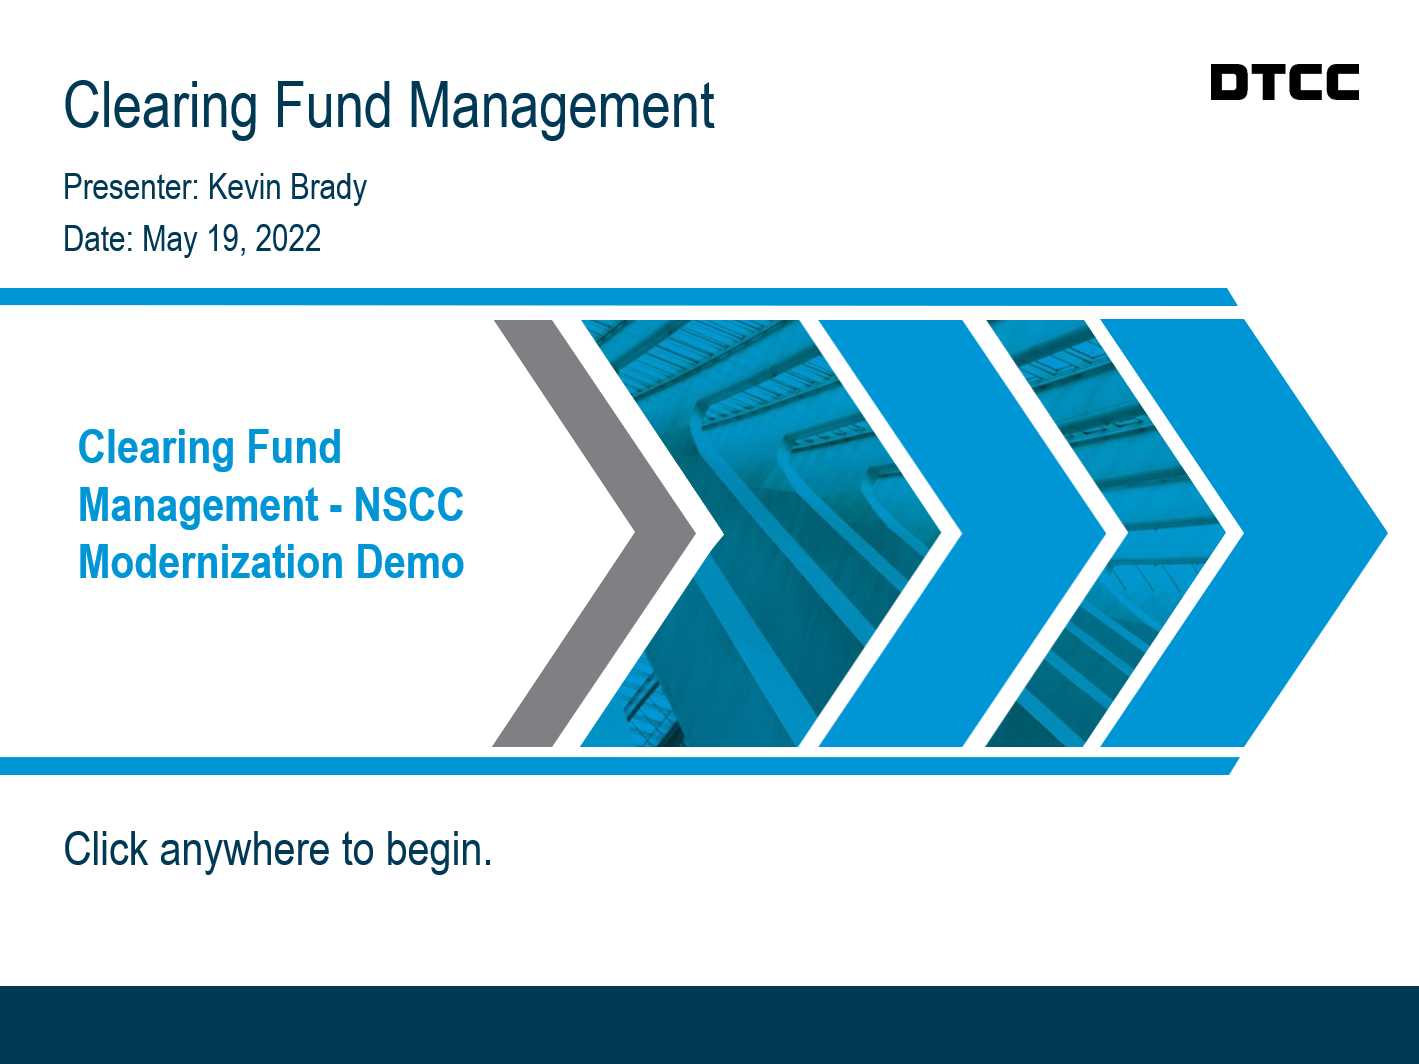 Clearing Fund Management - NSCC Modernization Demo